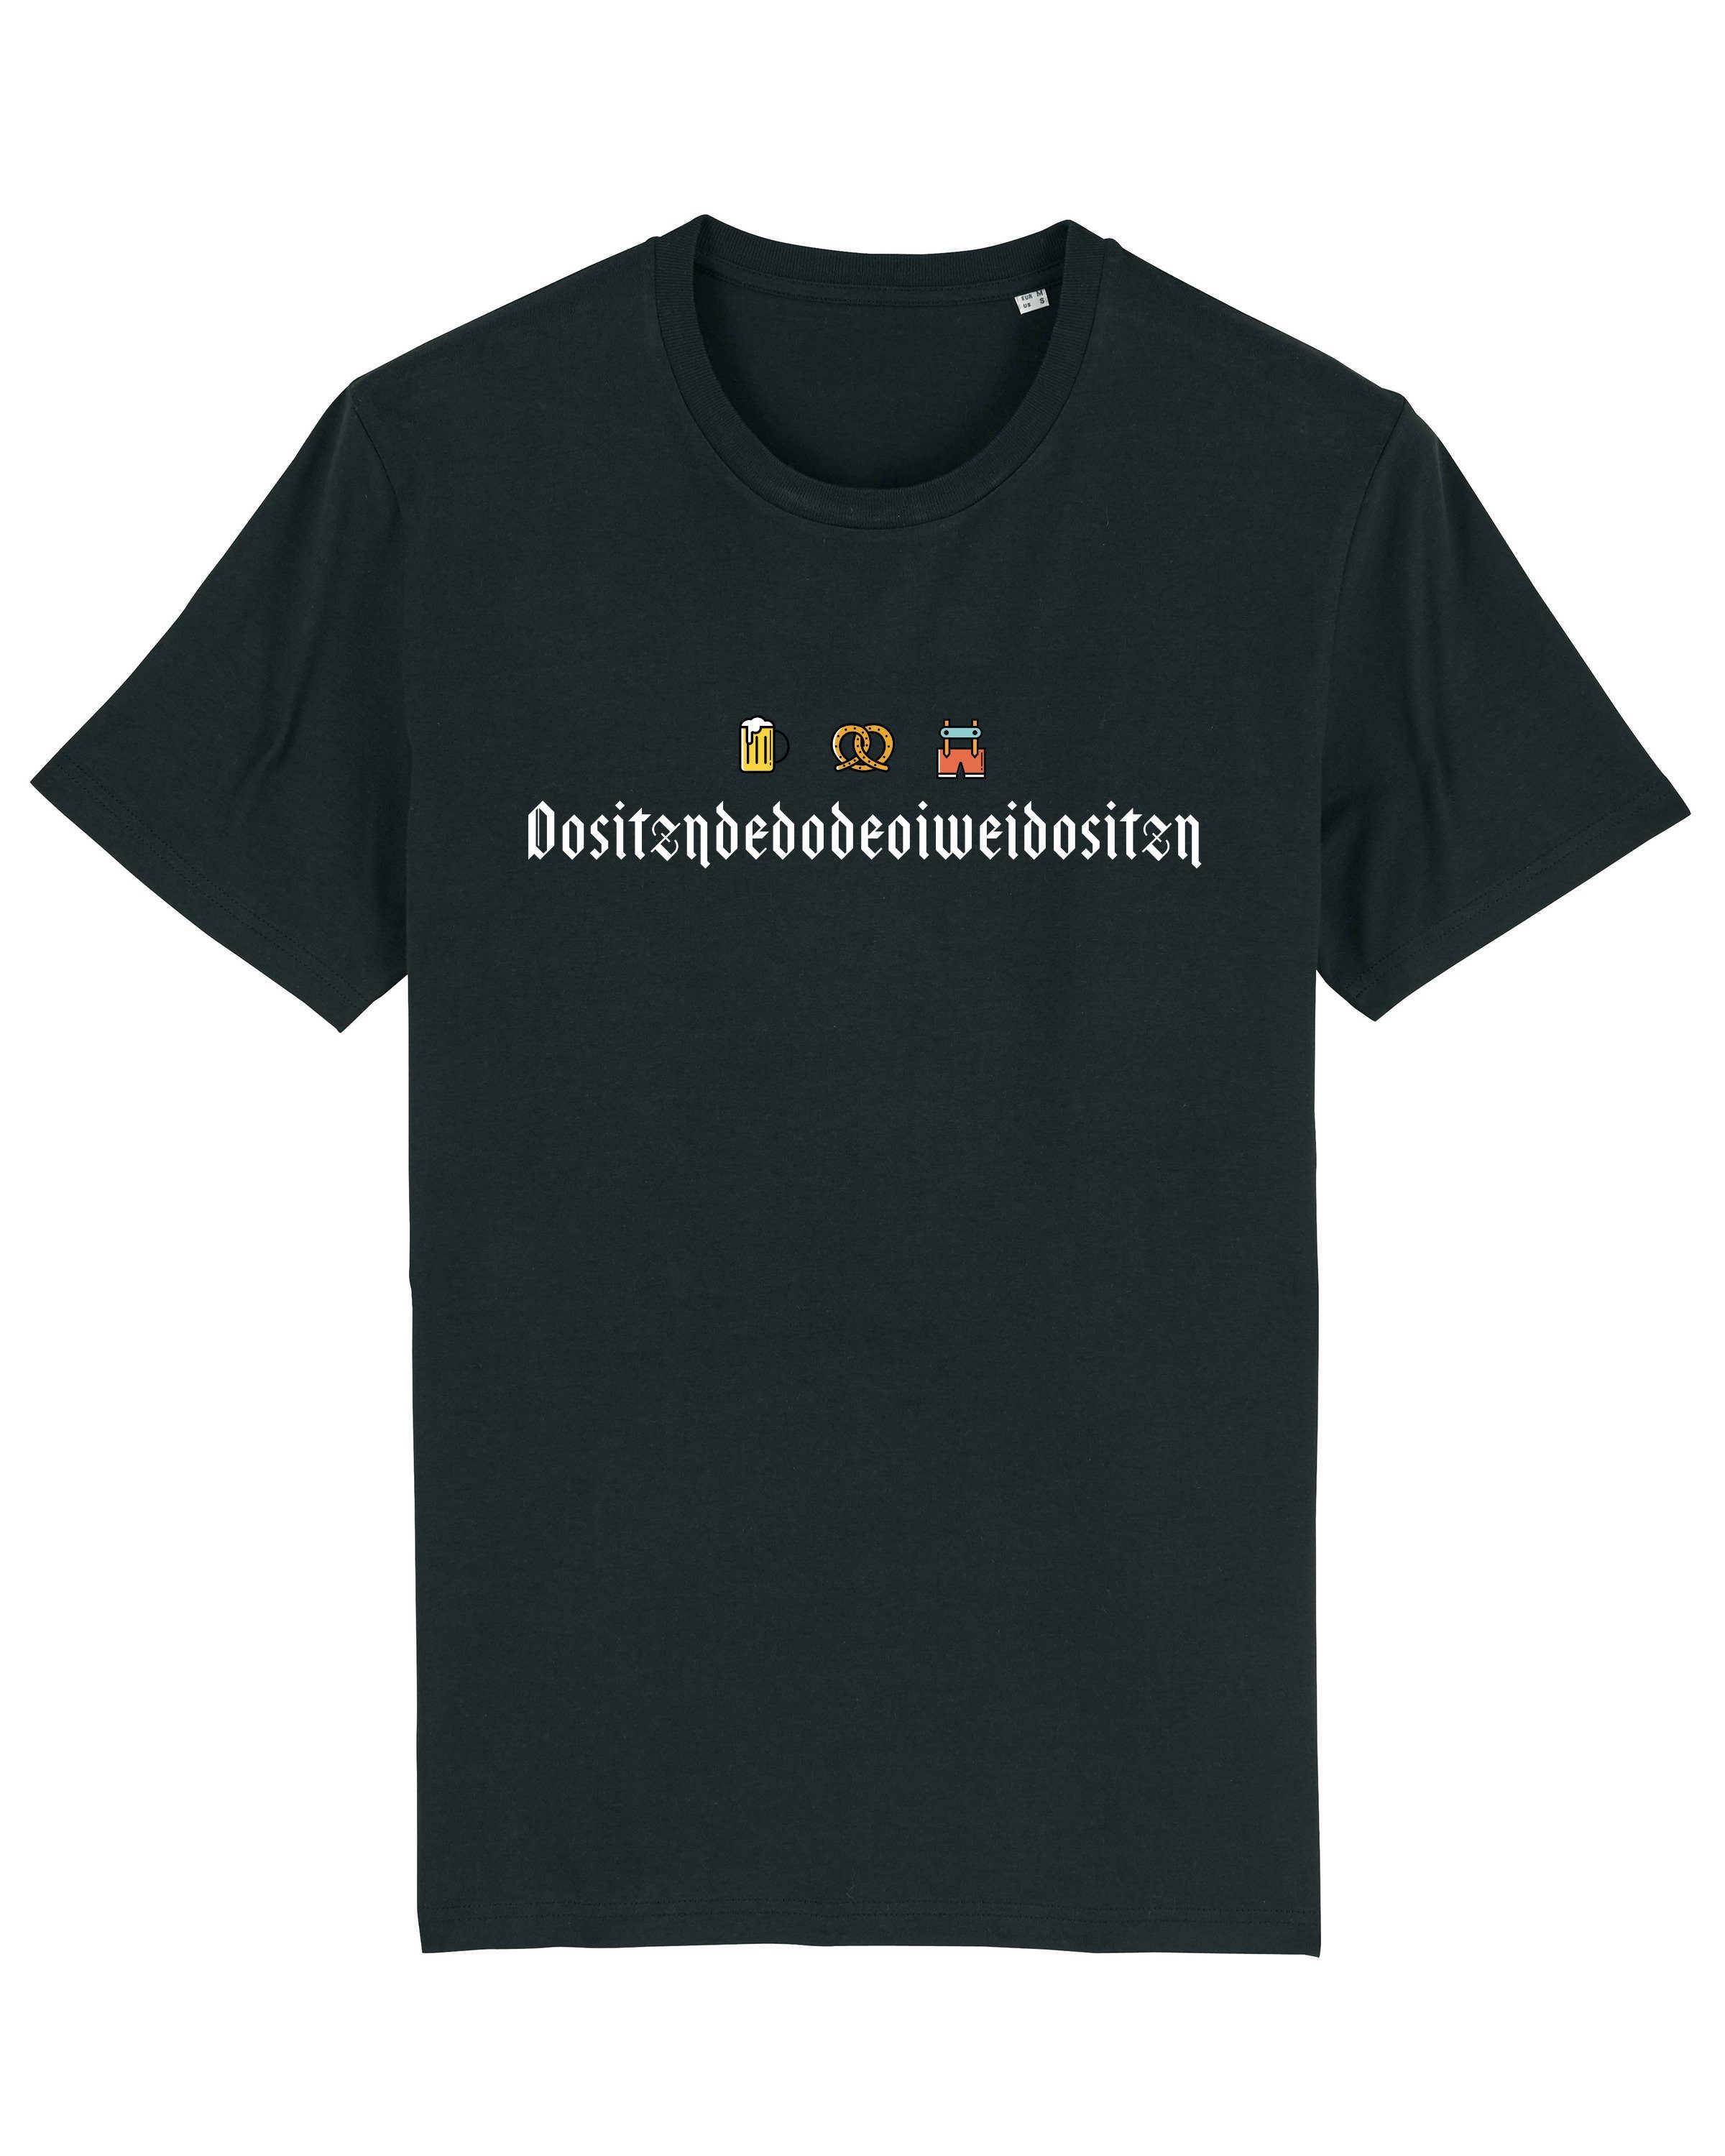 schwarz wat? Print-Shirt Dositzndedodeoiweidositzn (1-tlg) Apparel